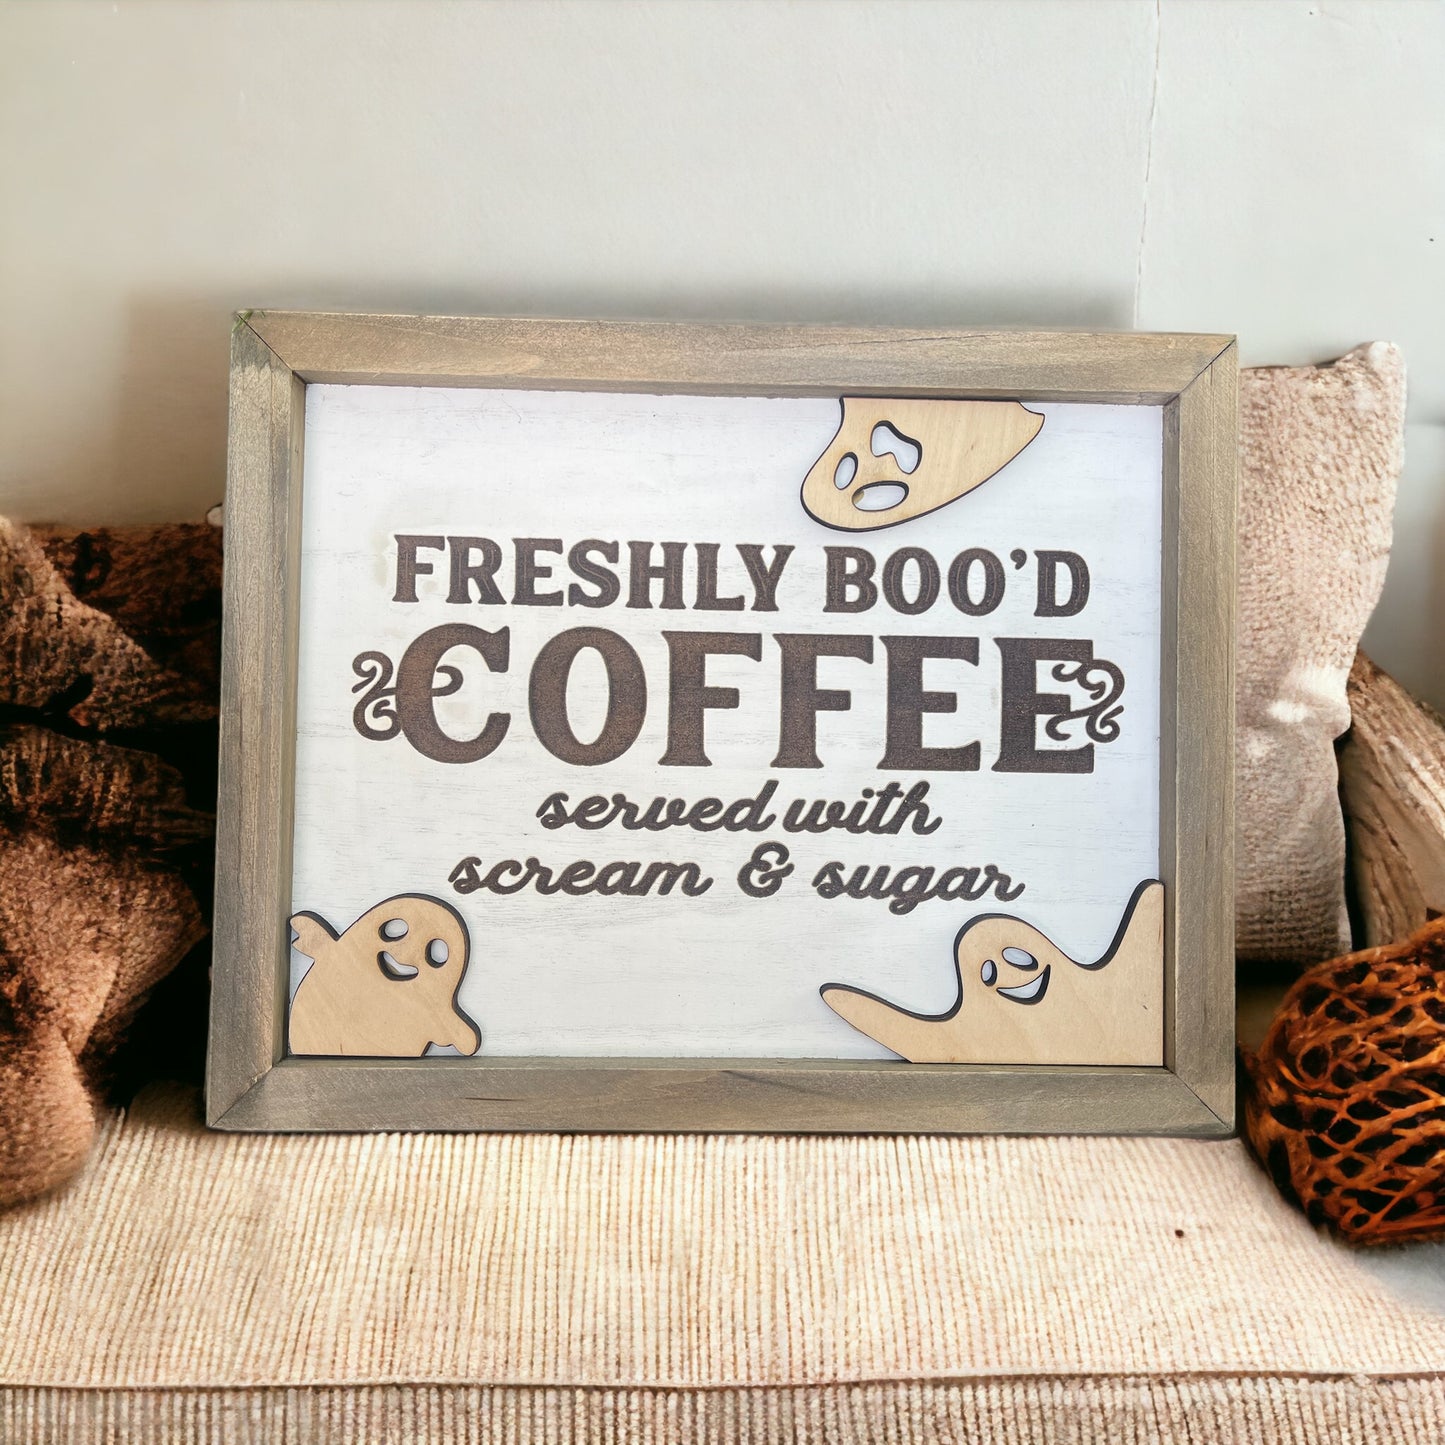 Freshly boo’d coffee